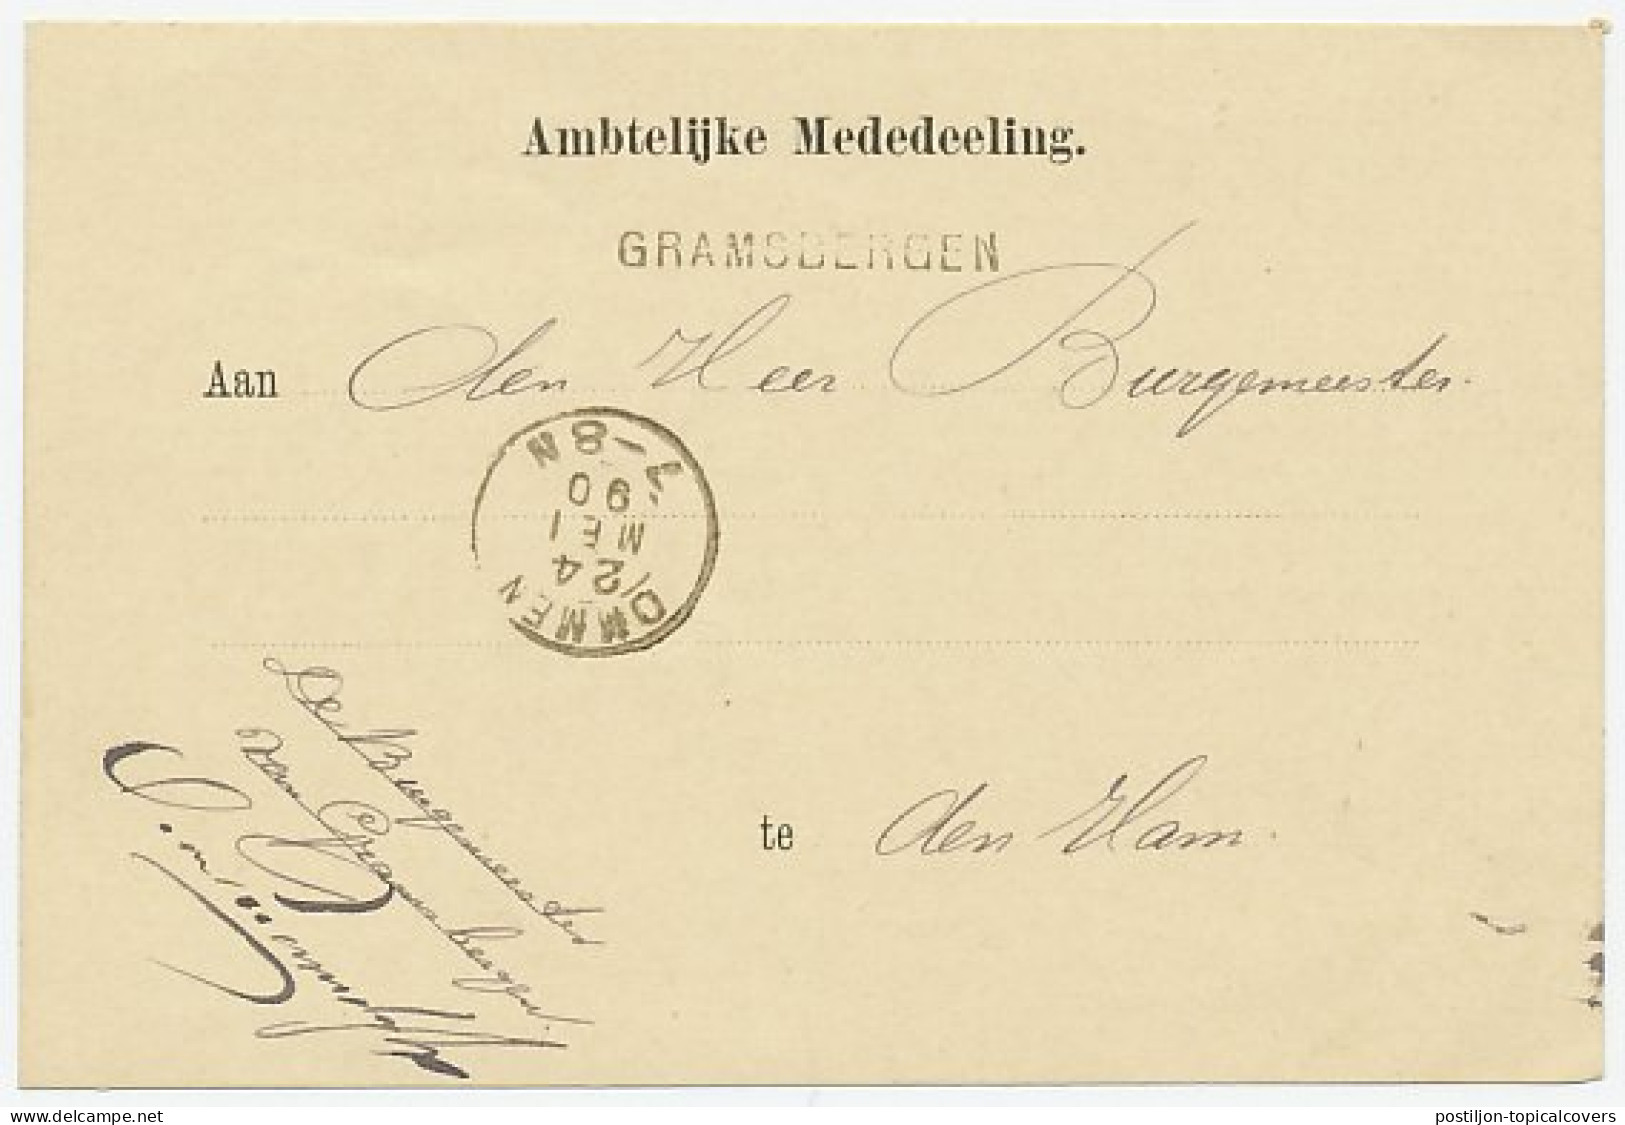 Naamstempel Gramsbergen 1890 - Lettres & Documents